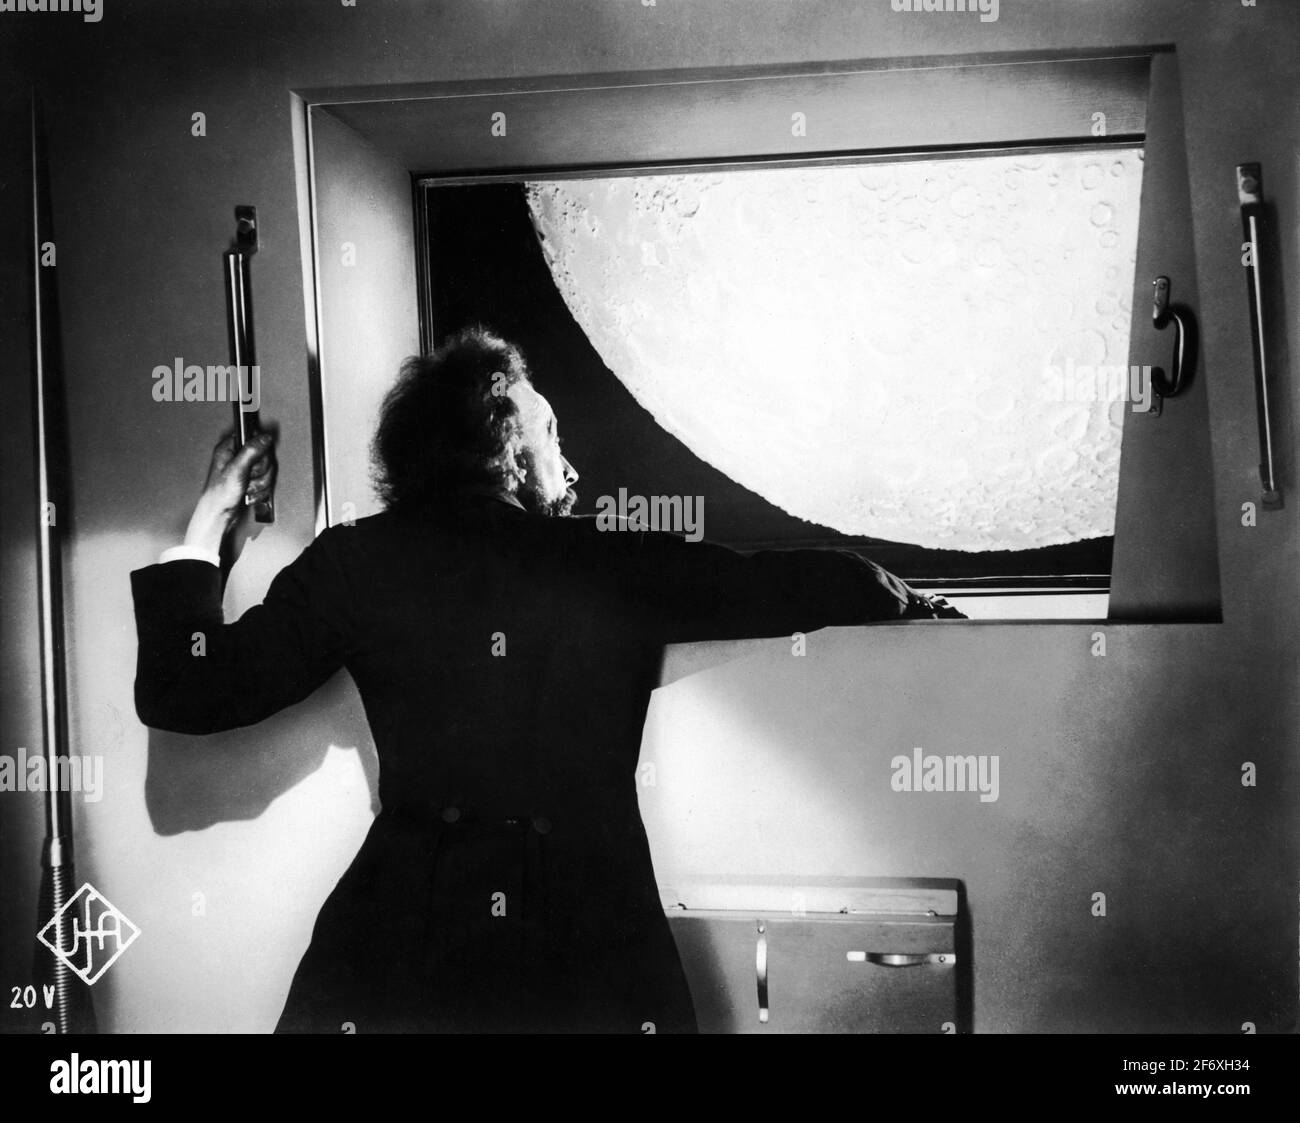 KLAUS POHL as Professor Georg Manfeldt in FRAU IM MOND / GIRL IN THE MOON 1929 director FRITZ LANG novel and script Thea von Harbou Fritz Lang-Film / Universum Film (UFA) Stock Photo